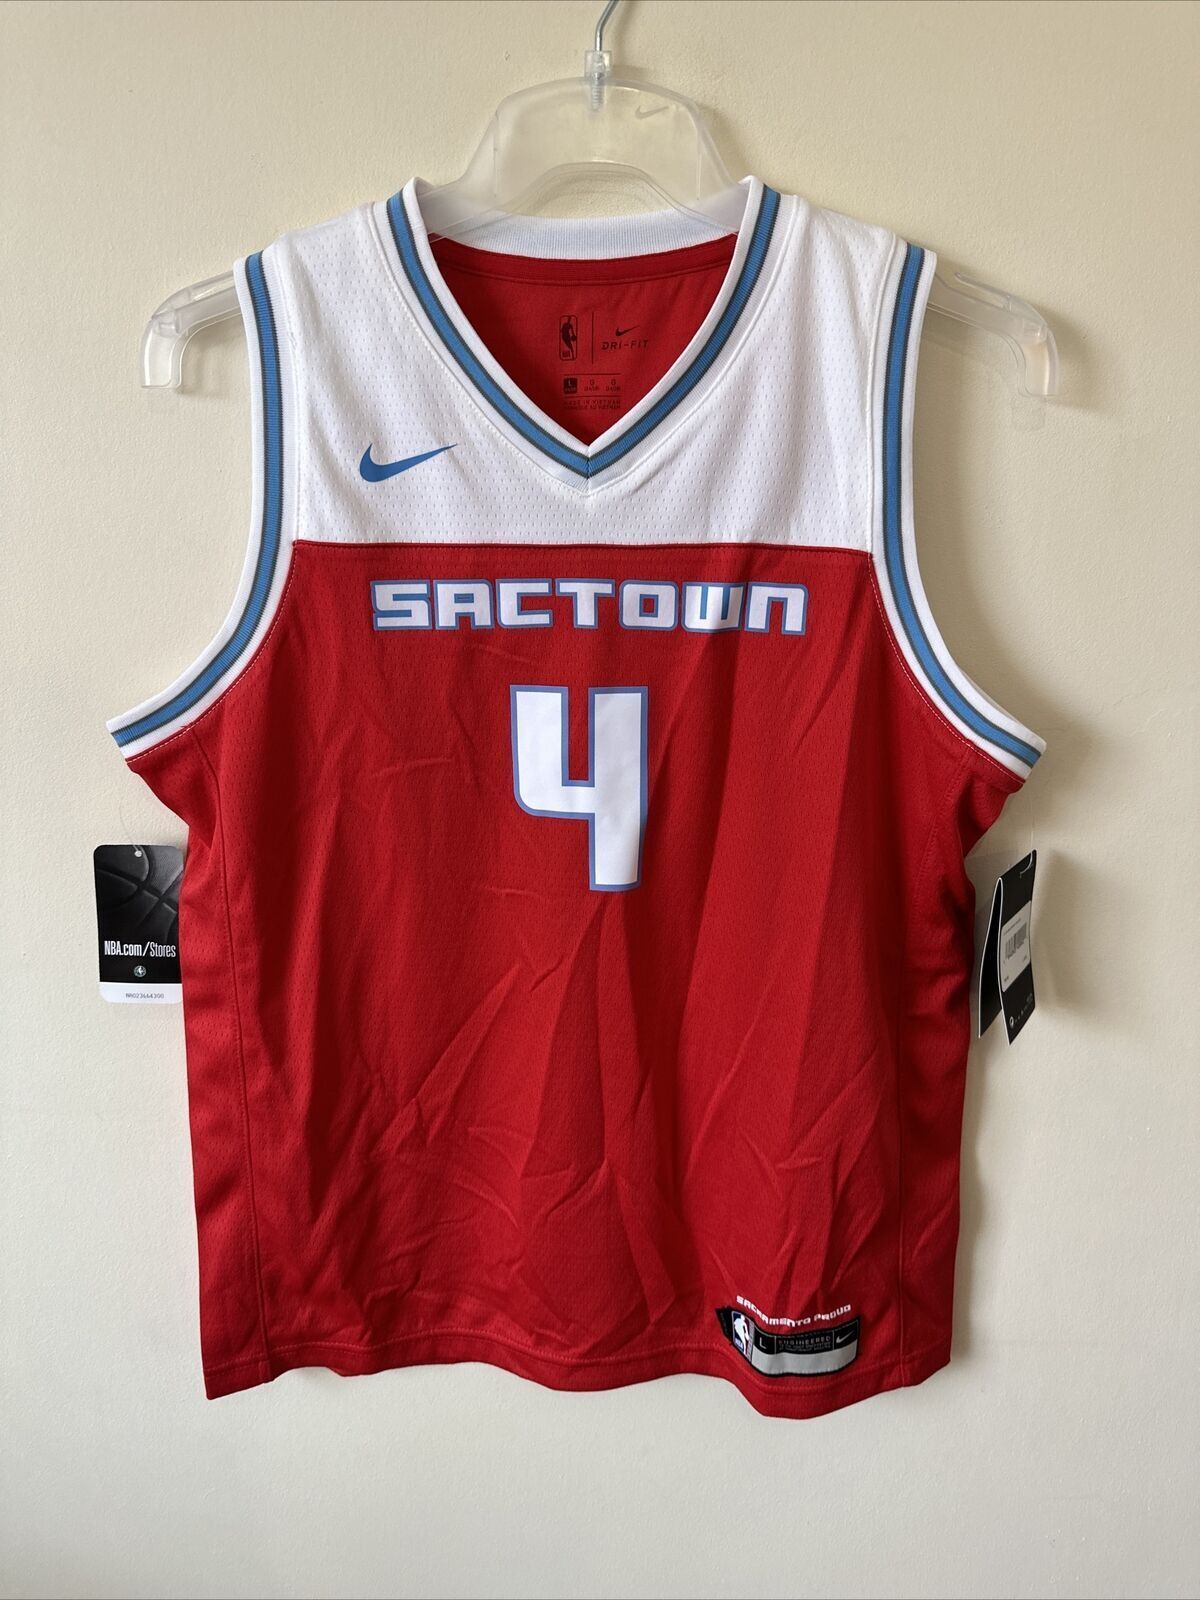 Nike NBA Sacramento Kings Swingman Jersey WEBBER 4 Youth 12-13 Years